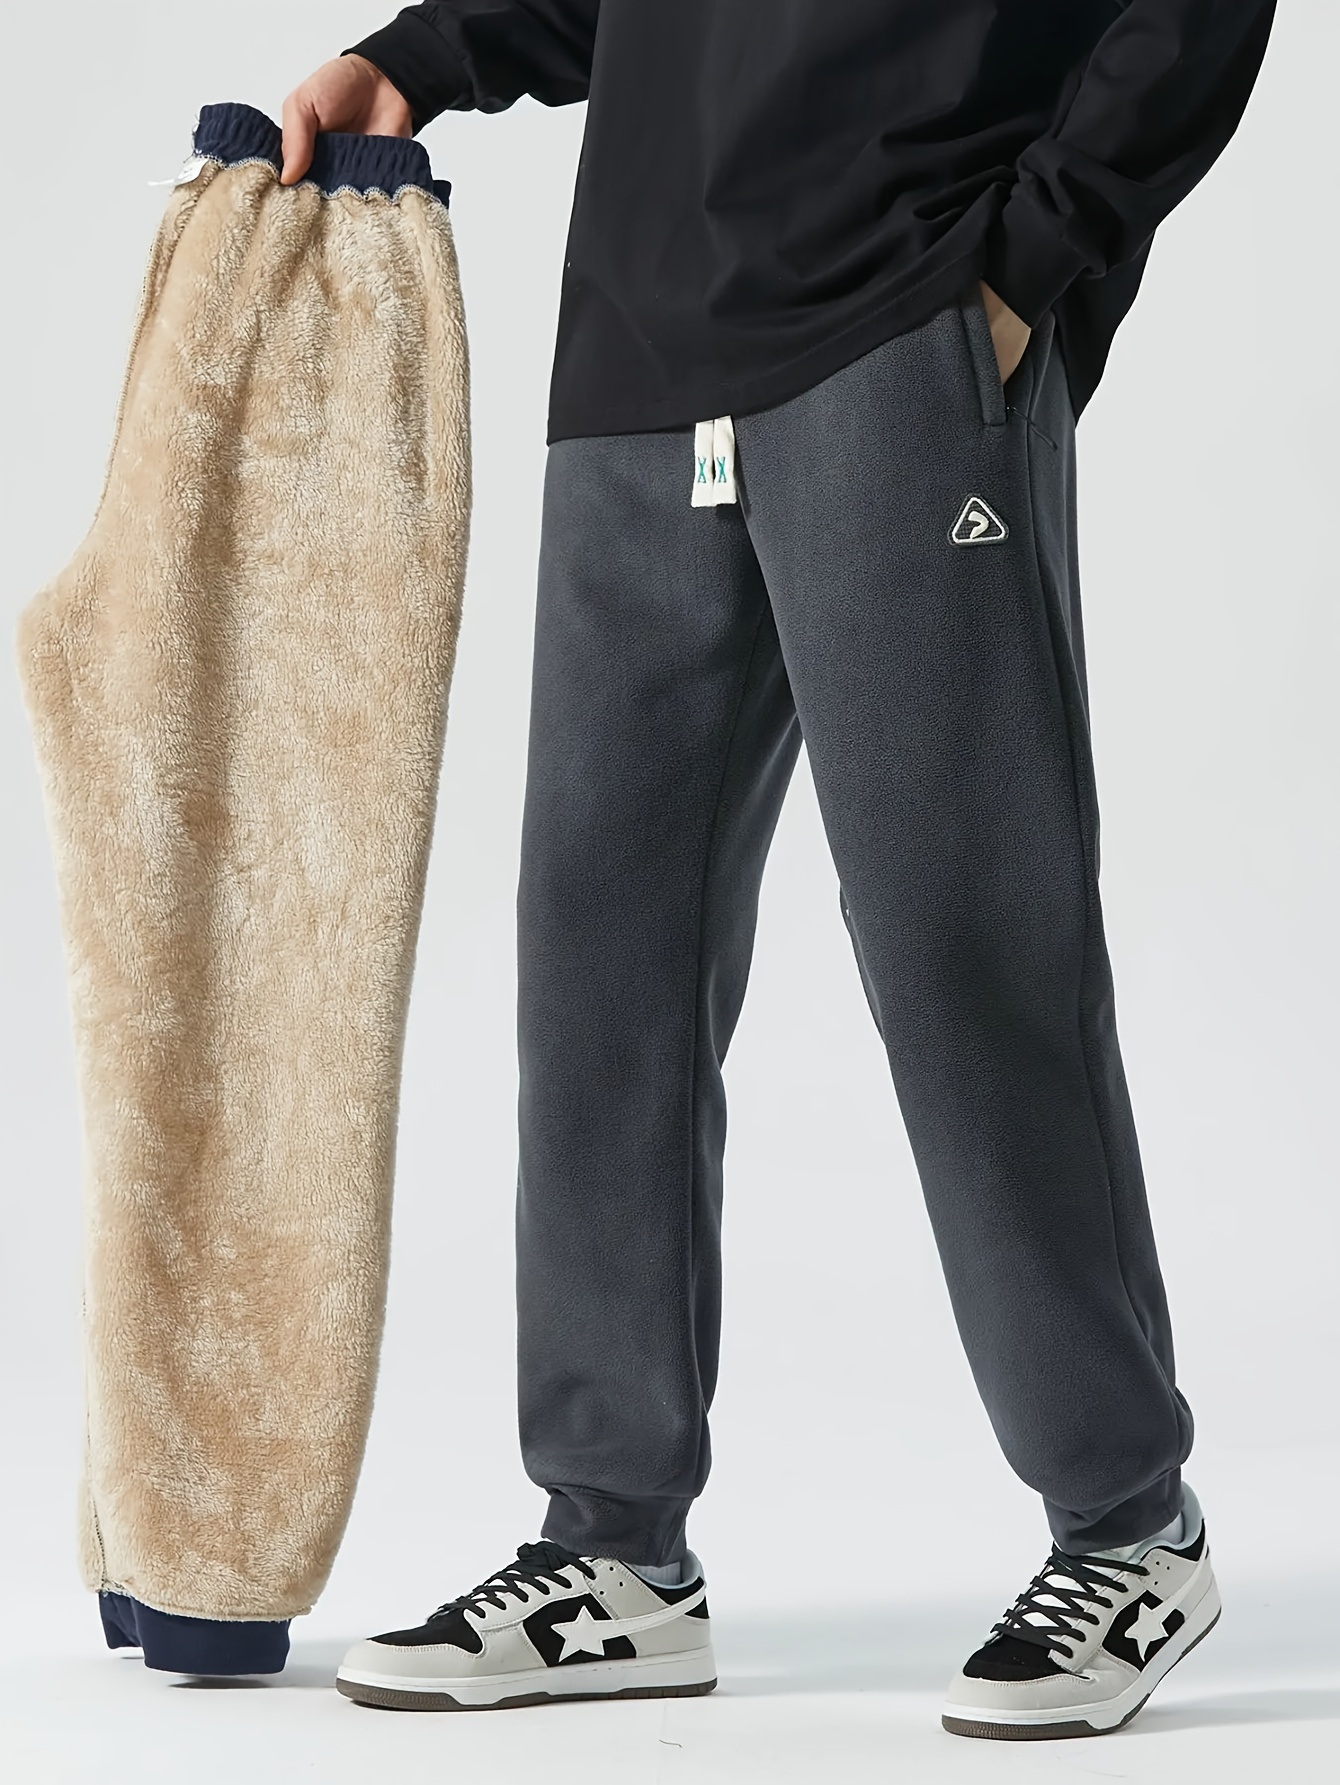 Men's Outdoor Thickened Fleece Lined Pants For Winter